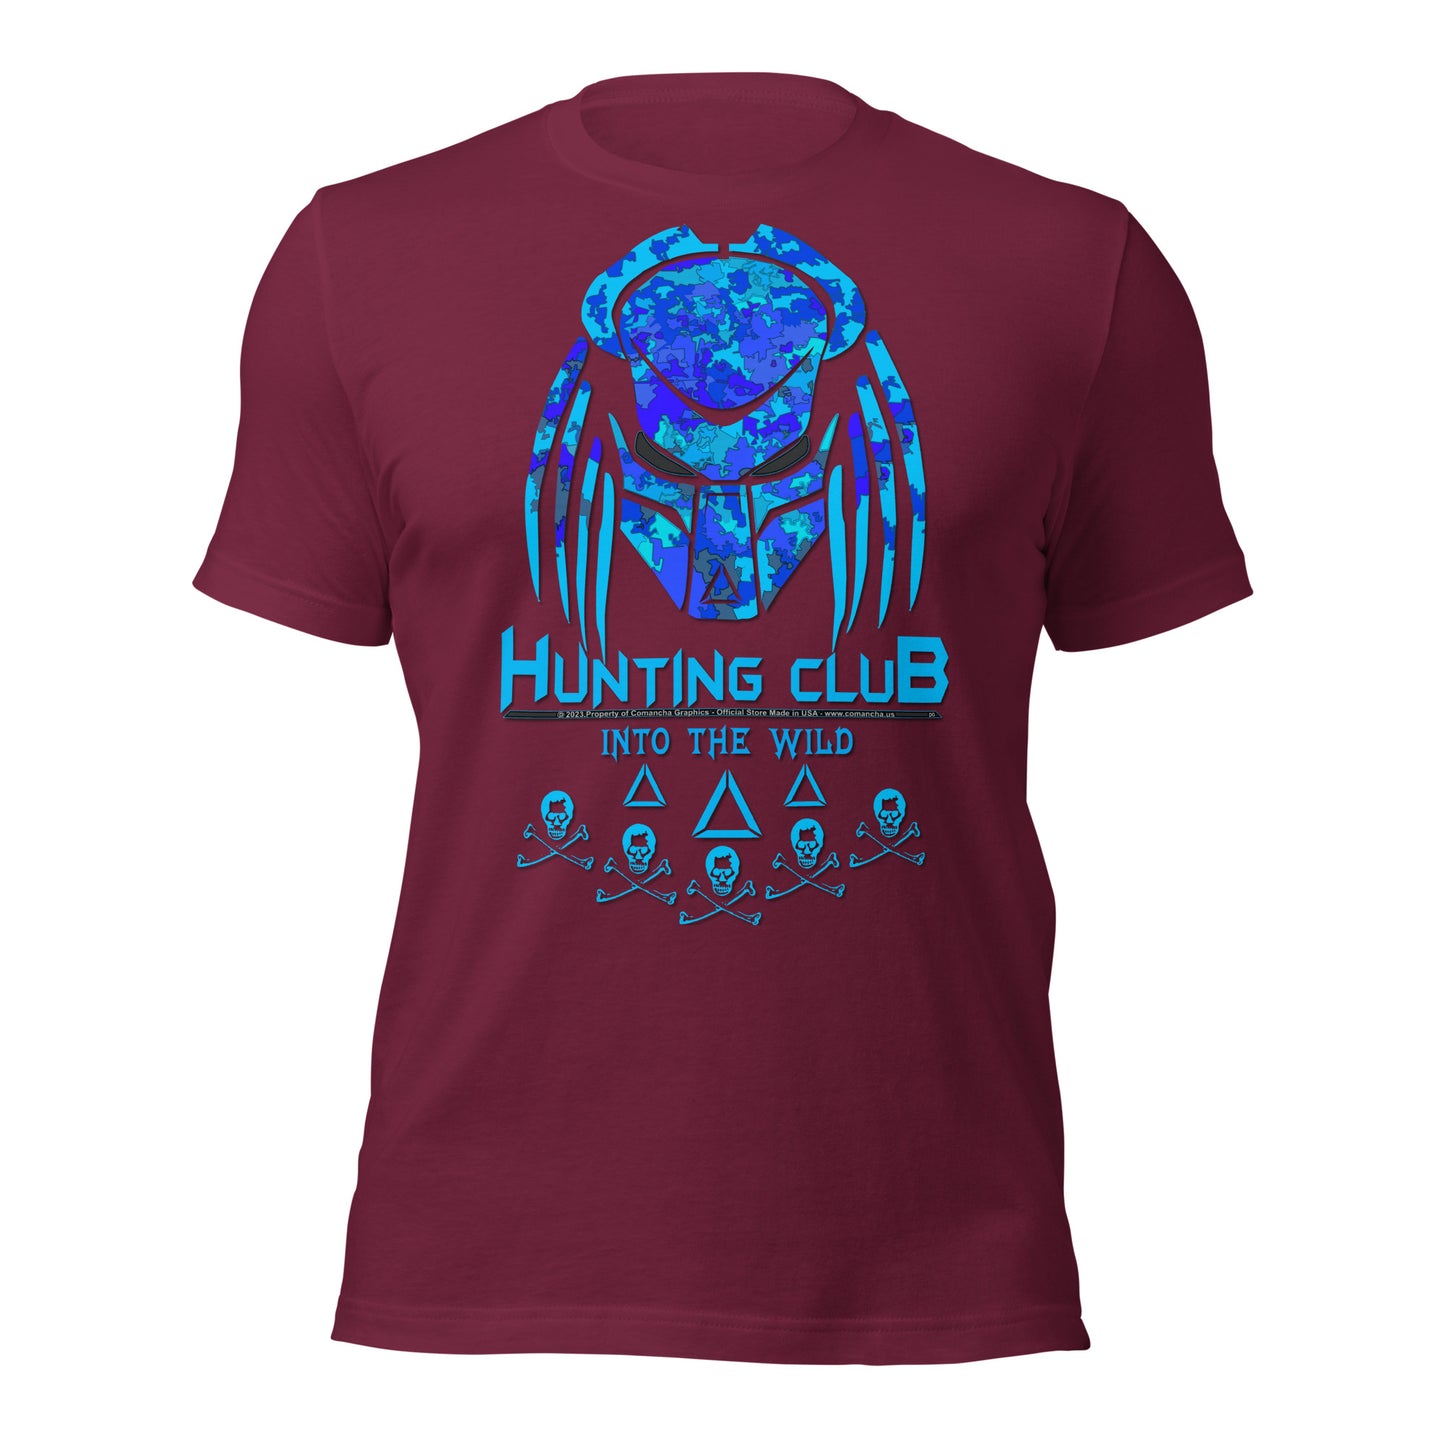 HUNTING CLUB t-shirt